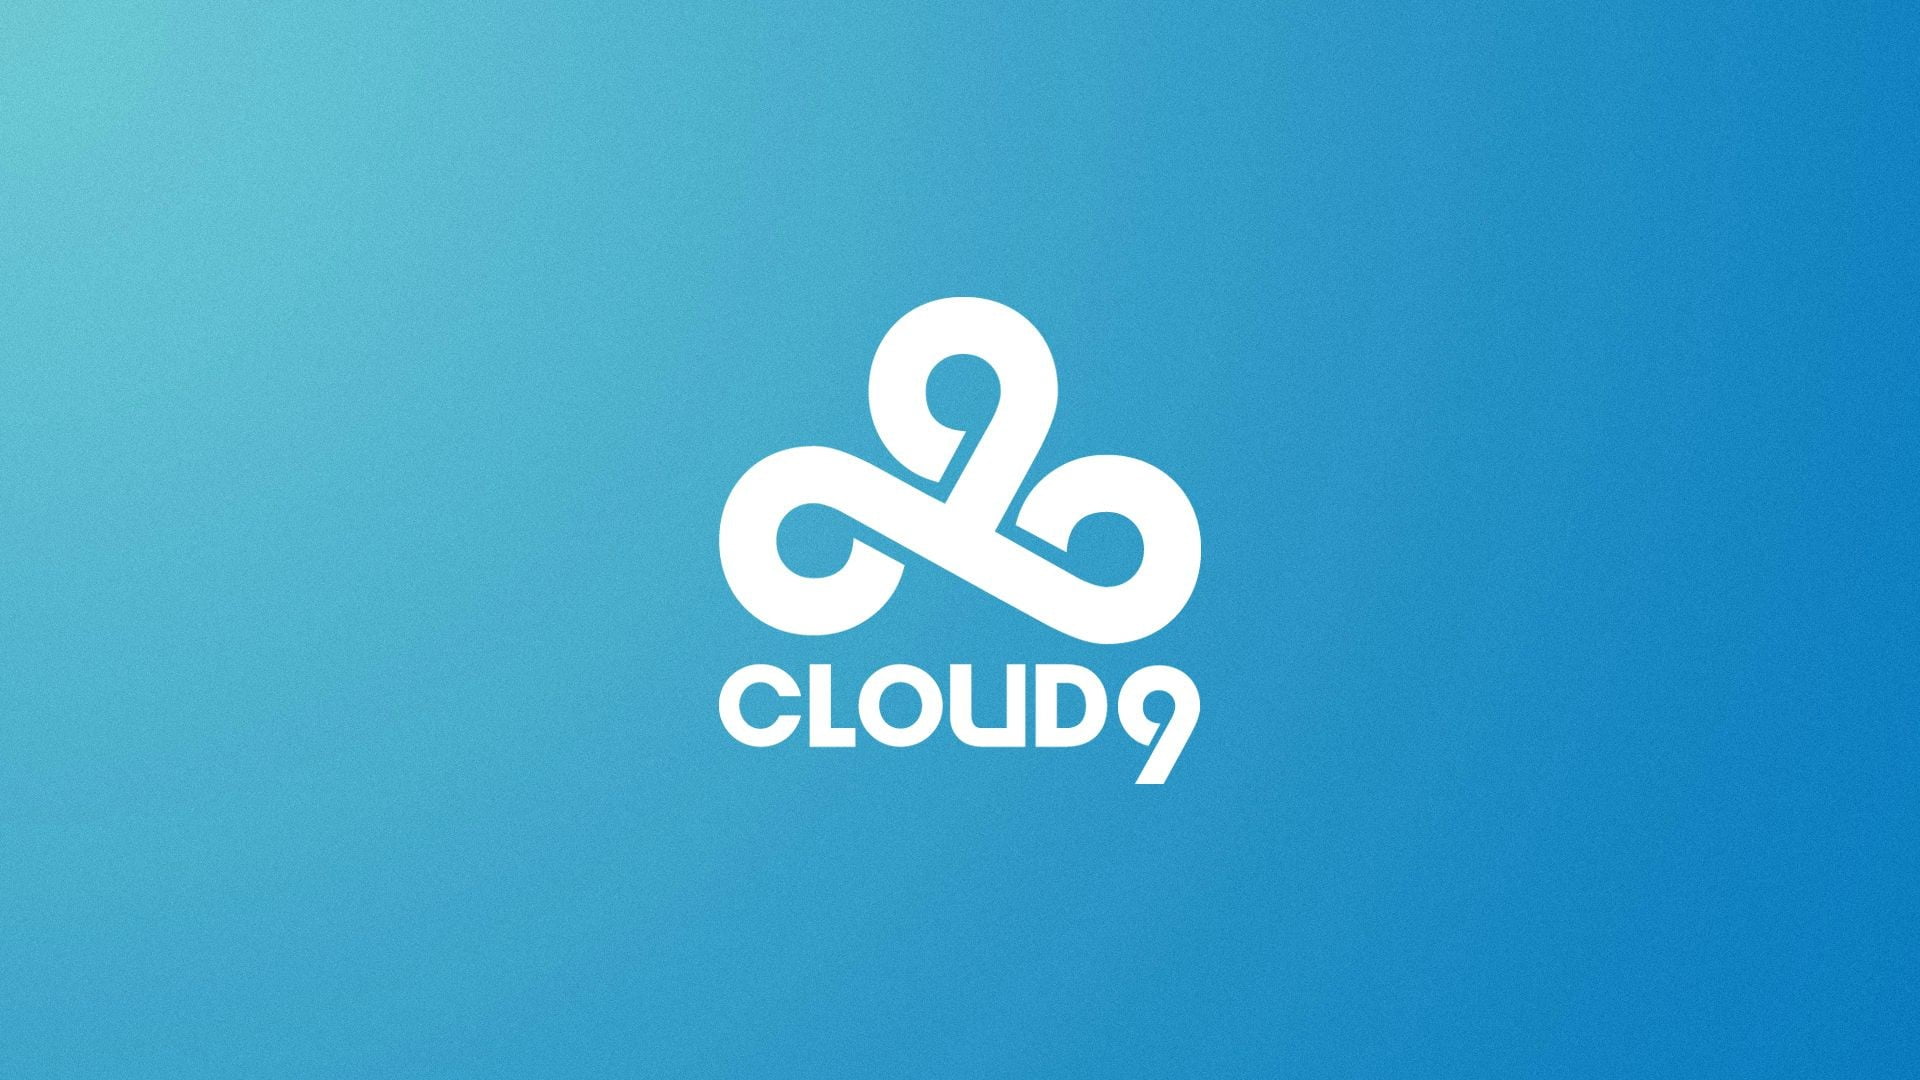 Cloud 9 Logo Cloud9 Dota 2 Cloud Nine Hd Wallpaper Wallpaper Flare